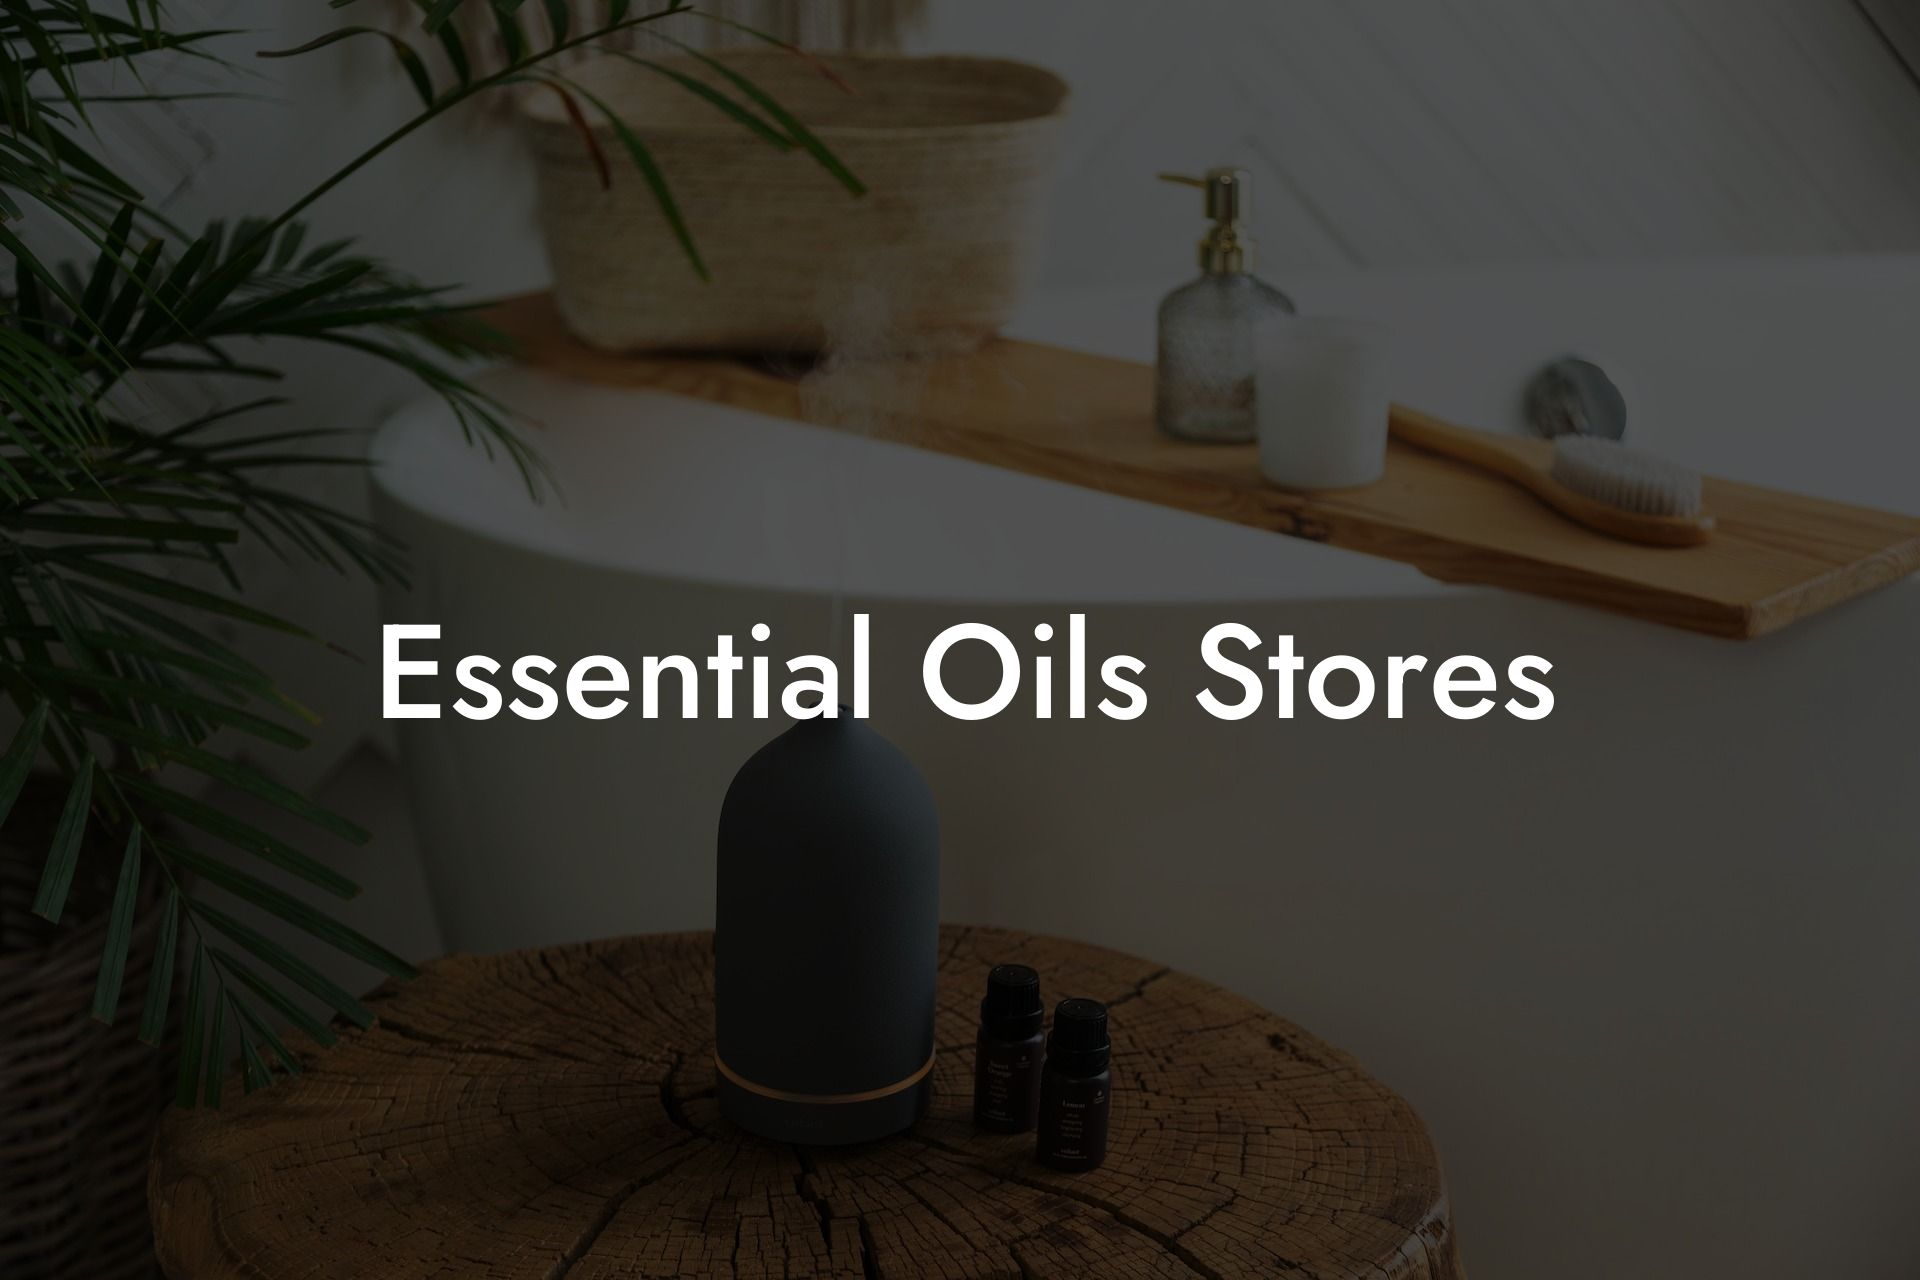 Essential Oils Stores